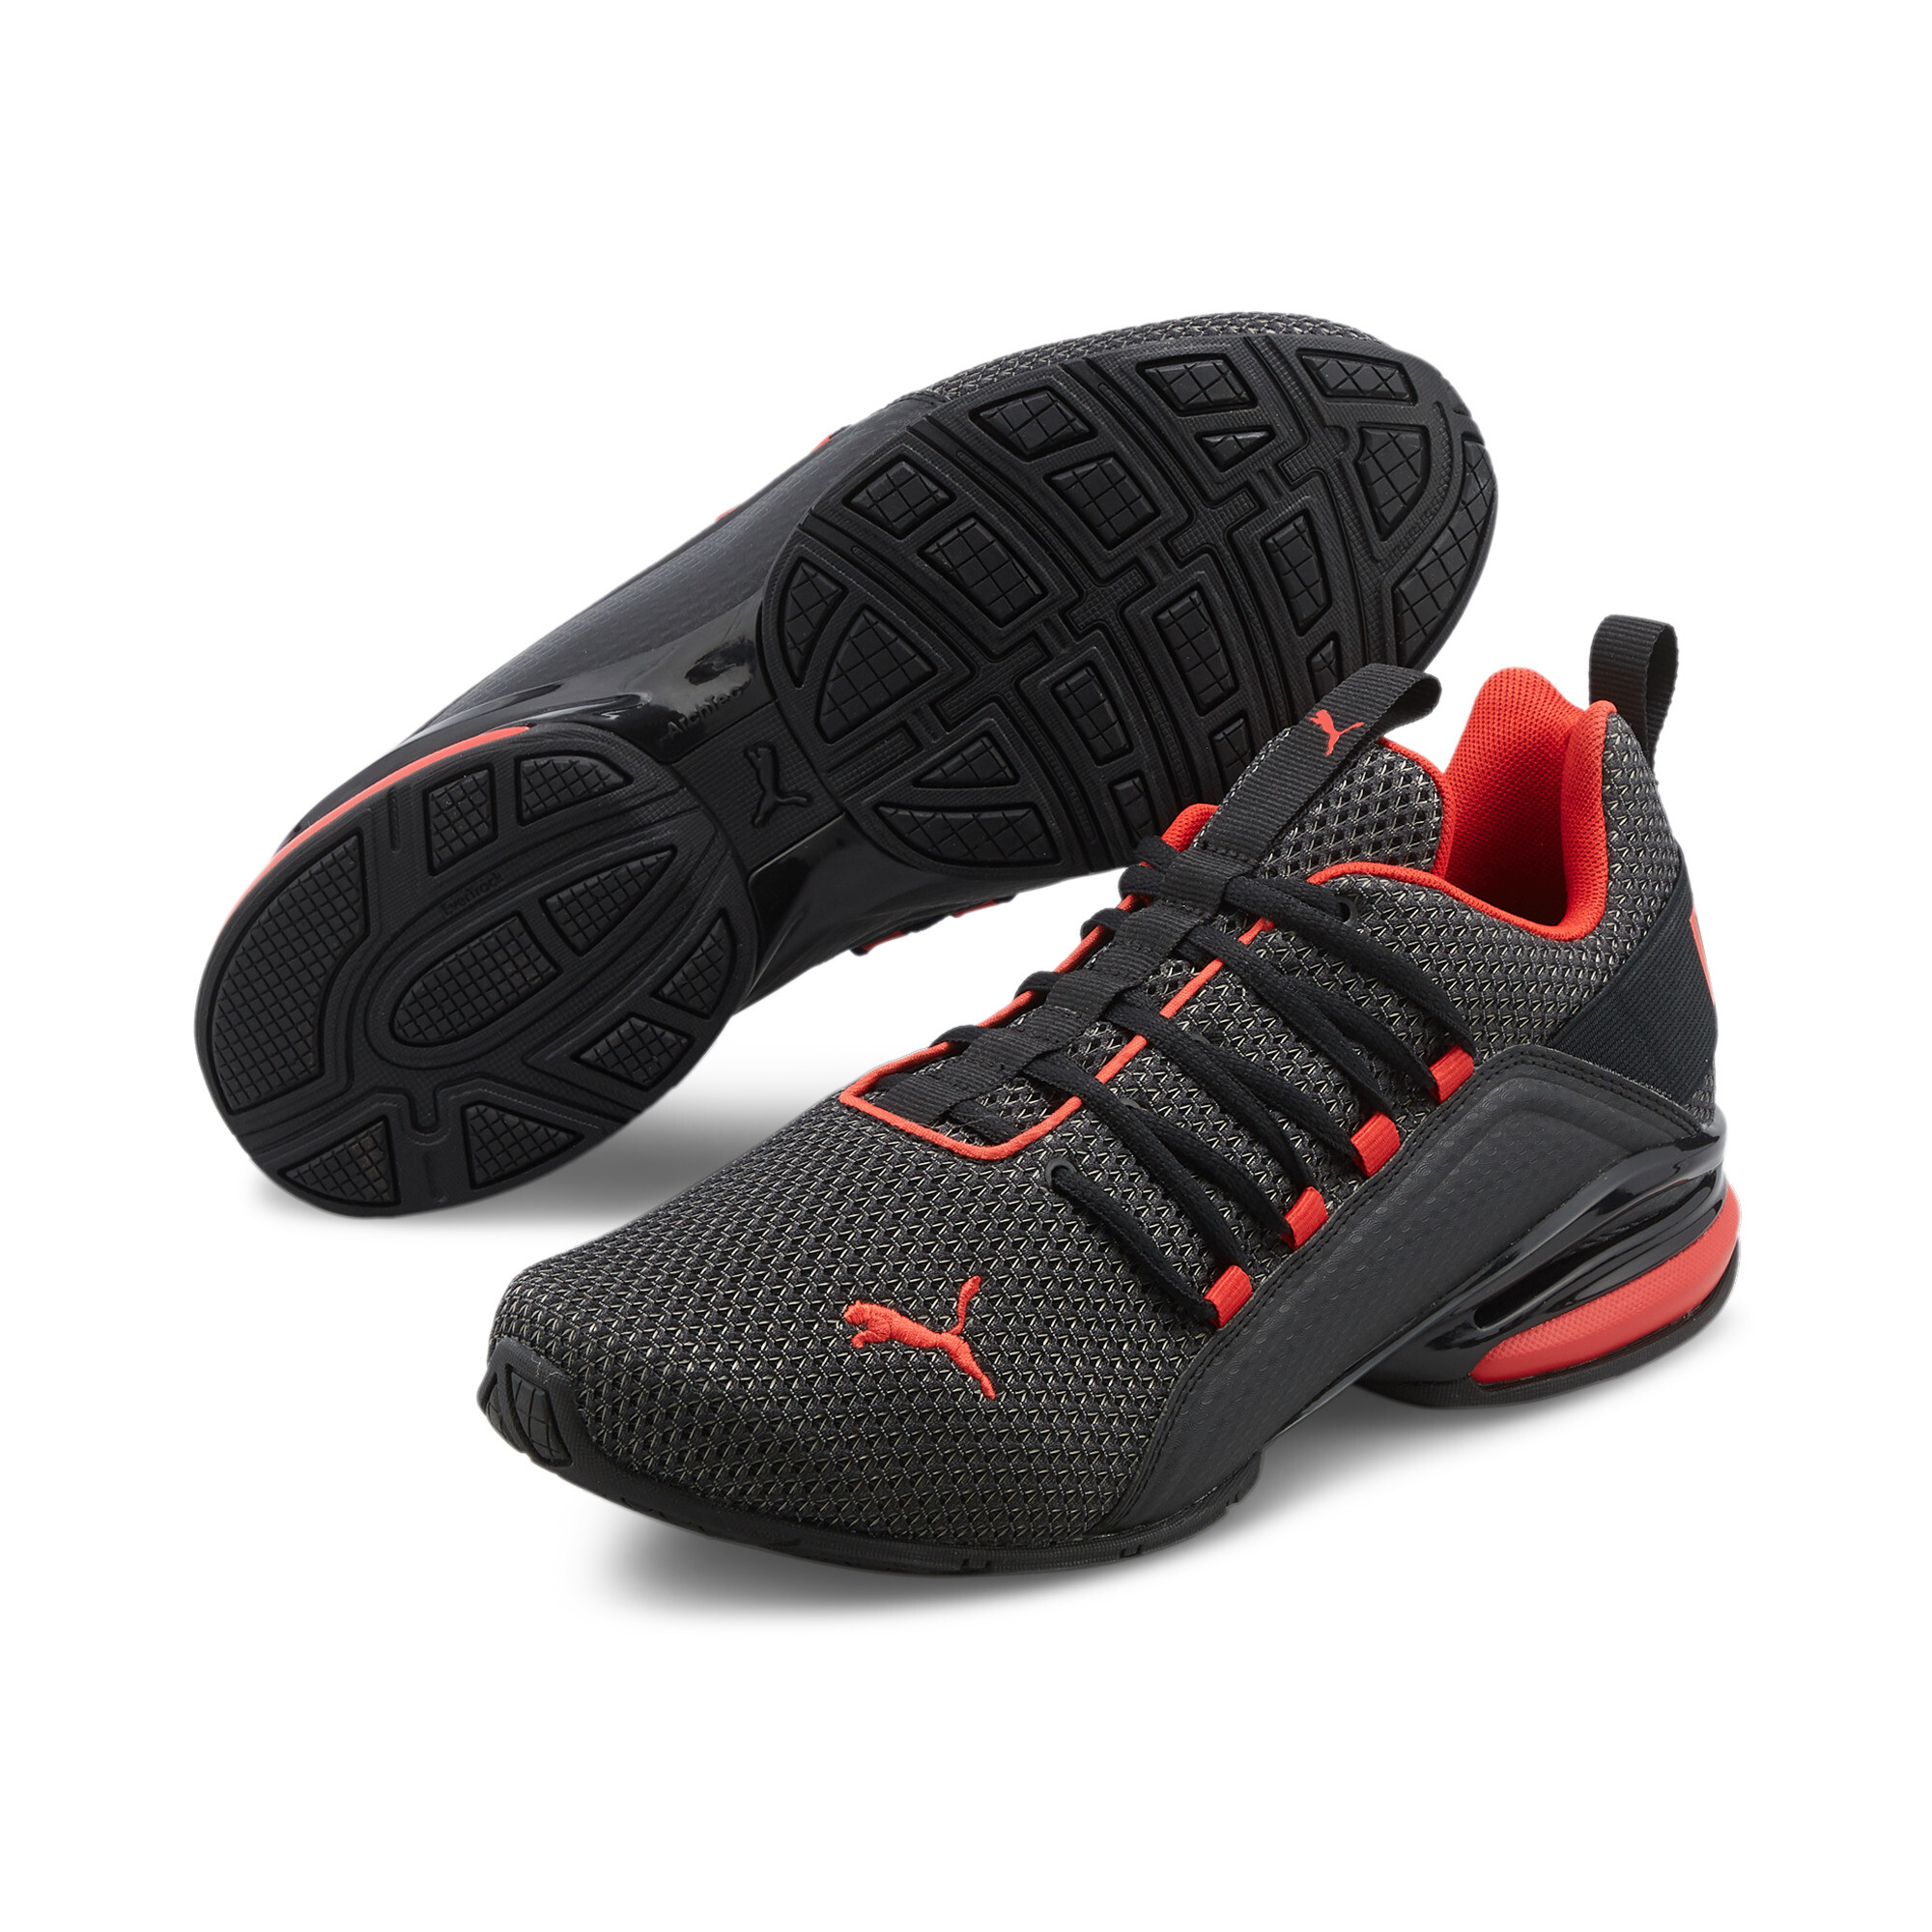 PUMA Men's Axelion LS Training Shoes | eBay